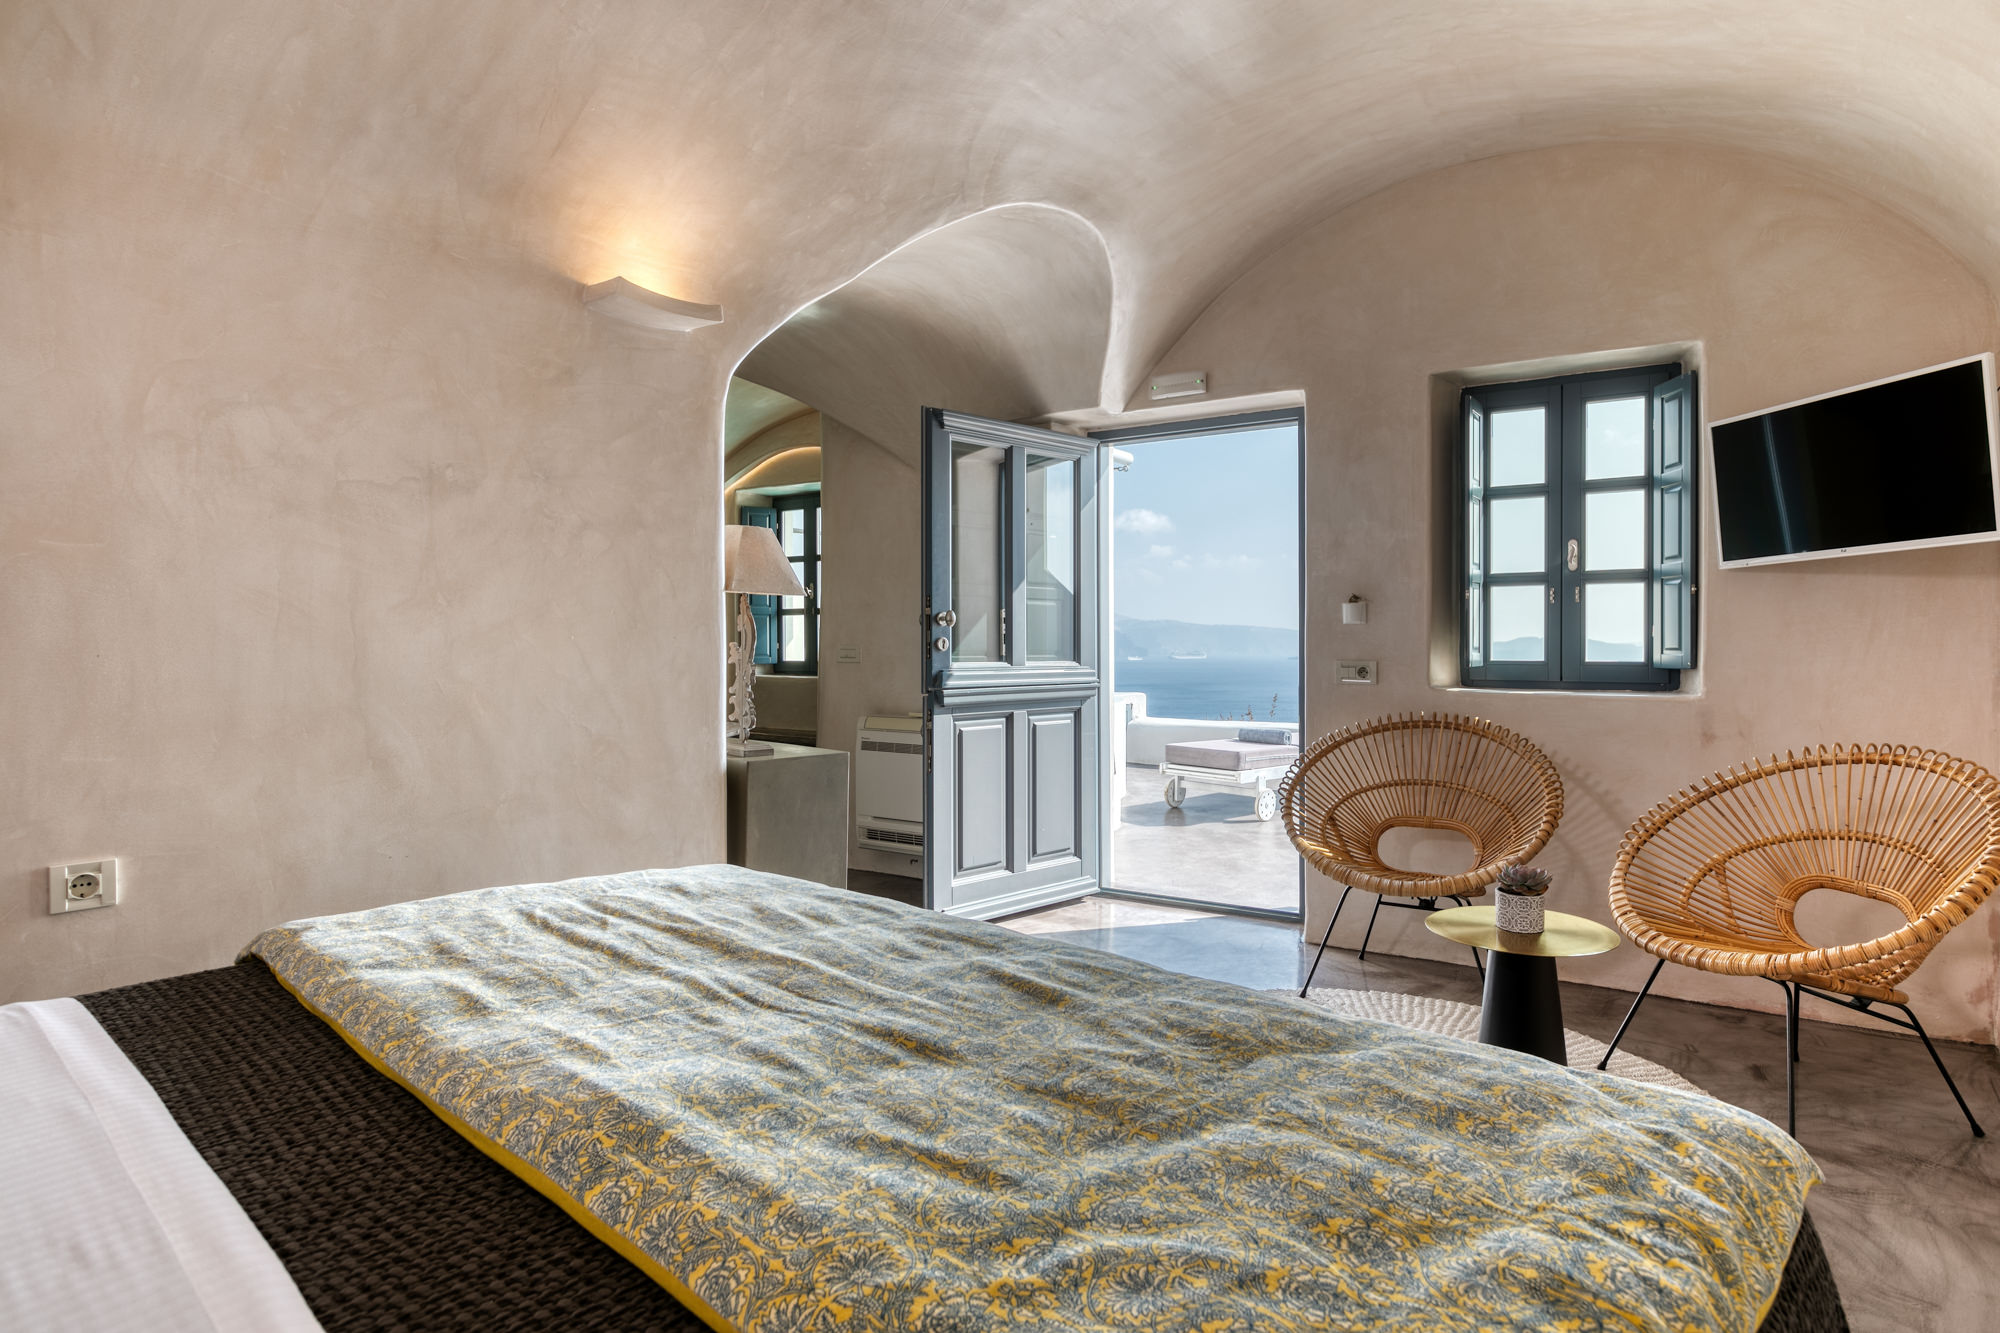 The lavish interior of the luxury apartments of Nostos Apartments in Oia Santorini